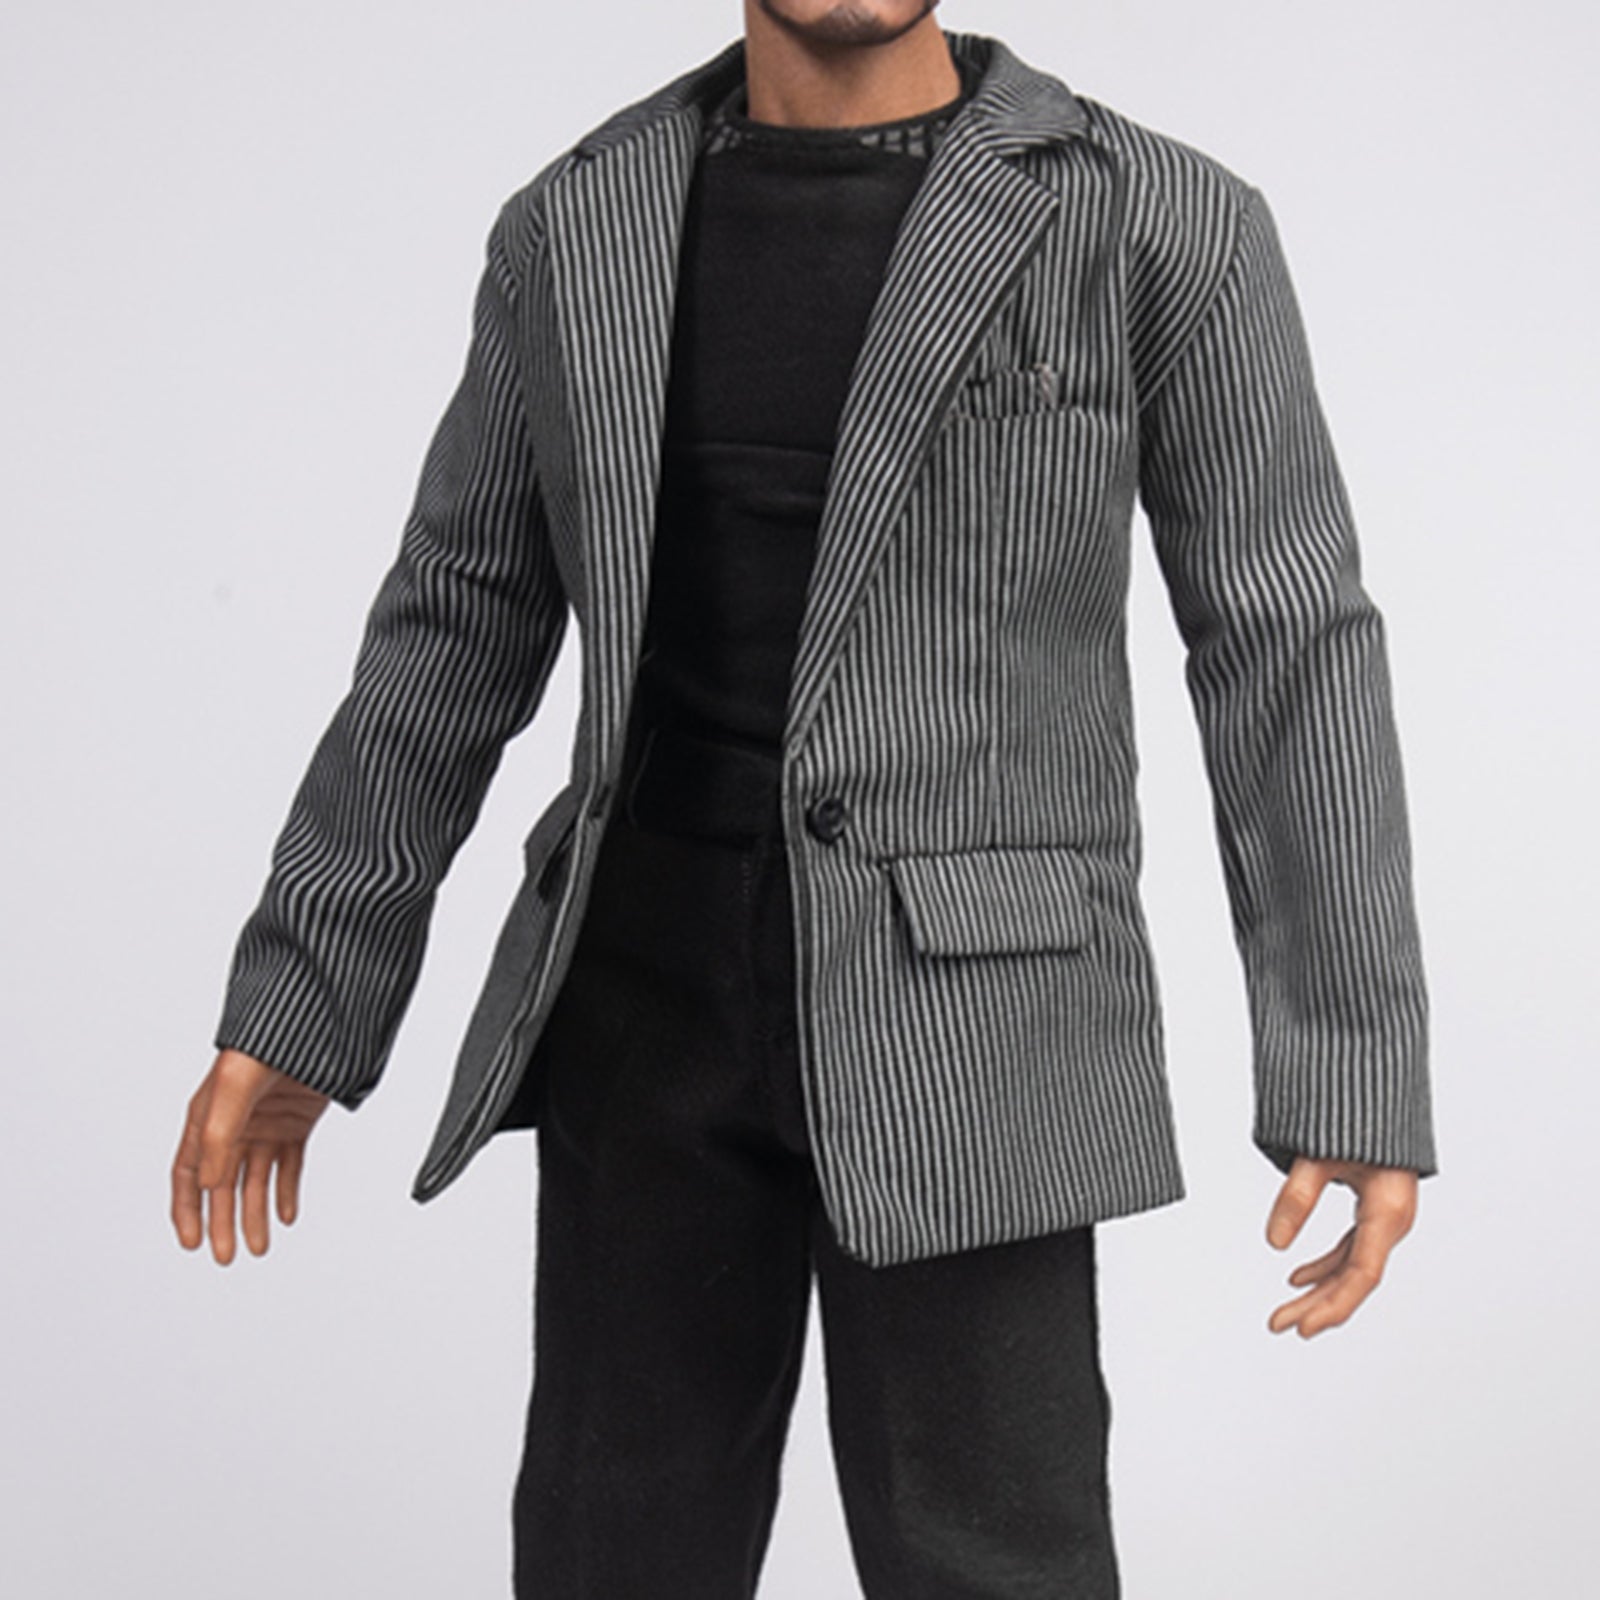 1/6 Scale Male Figure Suit Model Clothes Coat Handmade For 12" Action Figure